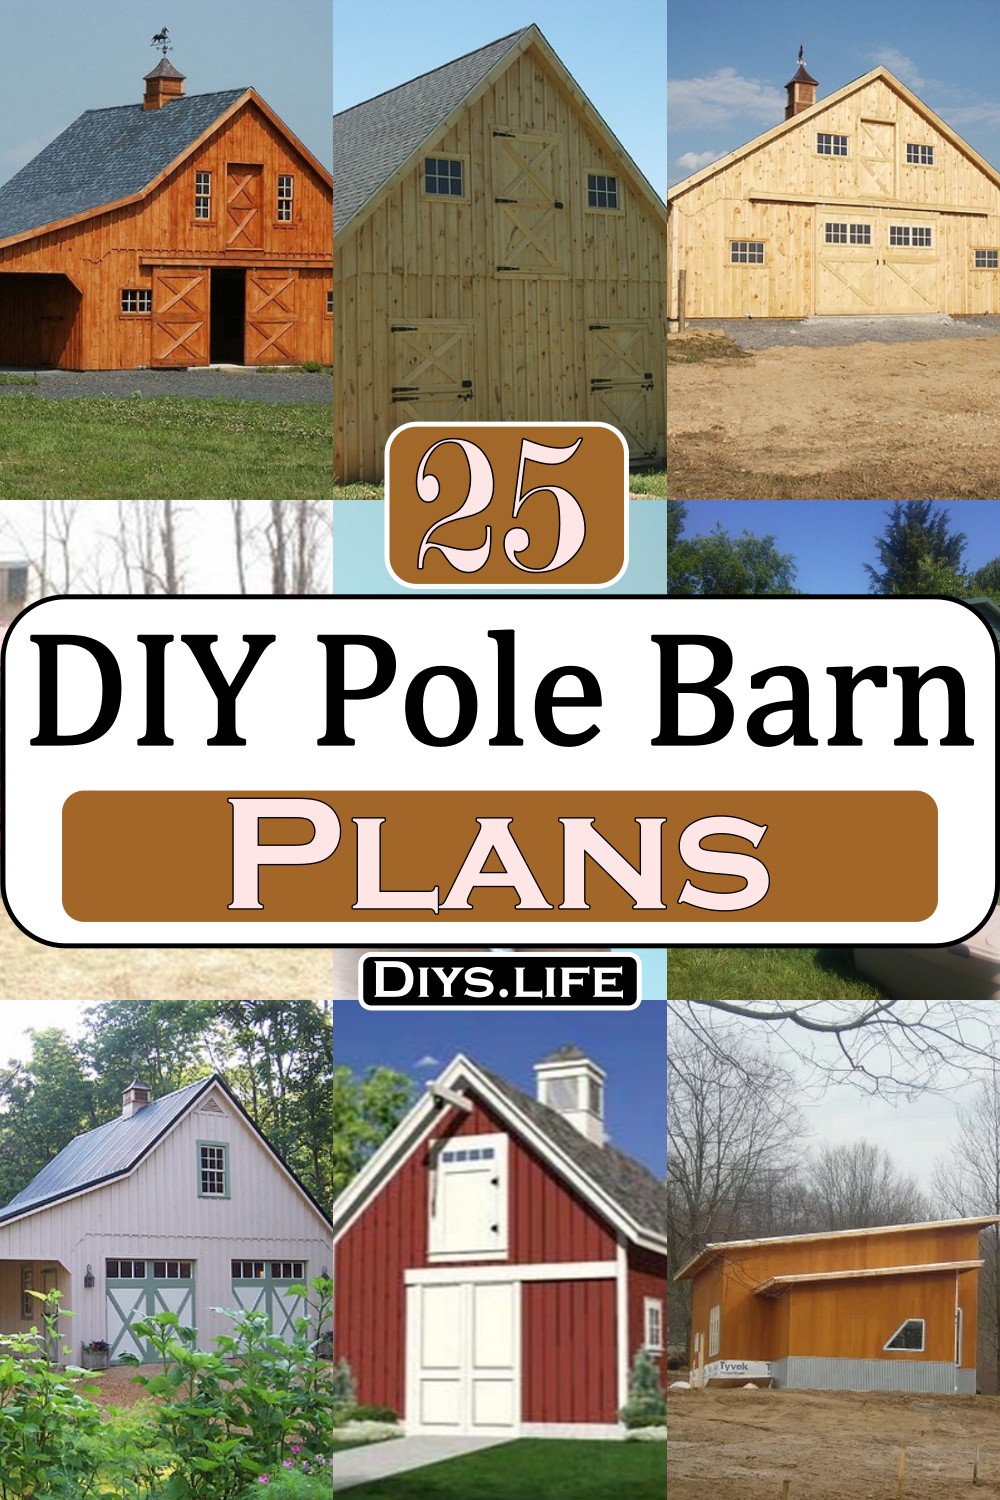 DIY Pole Barn Plans